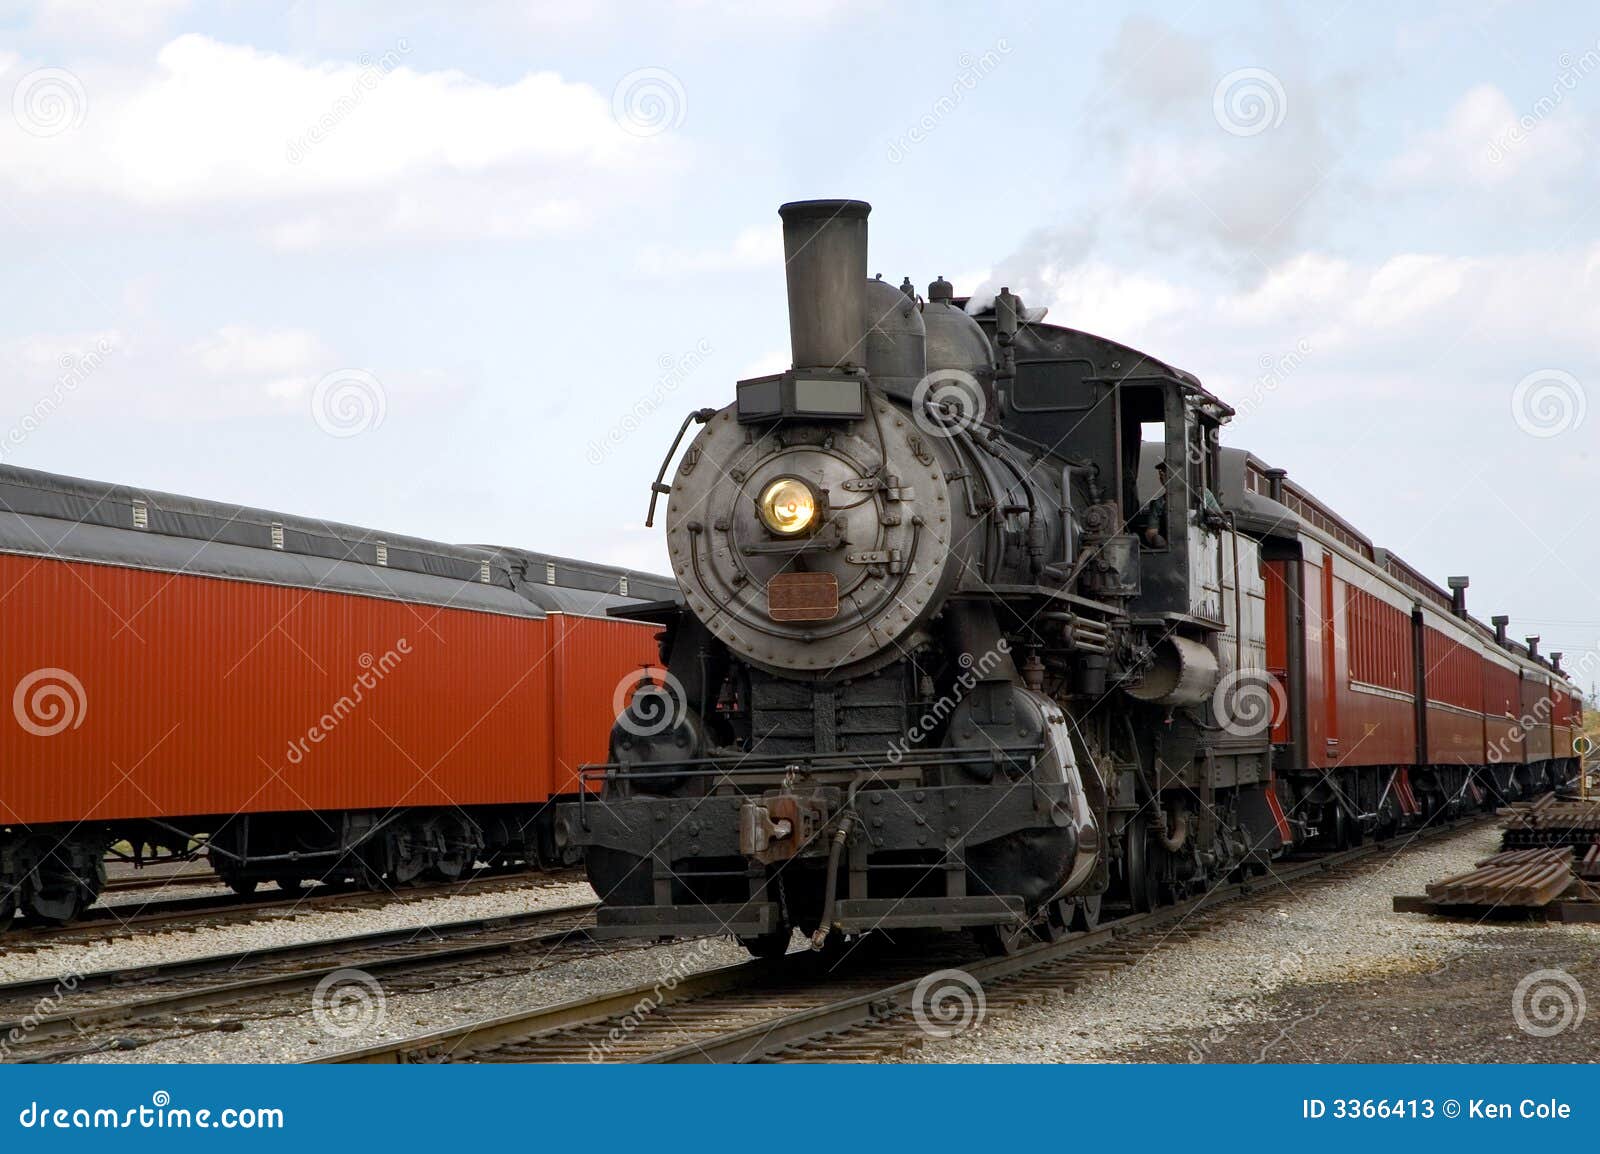 steam locomotive and train